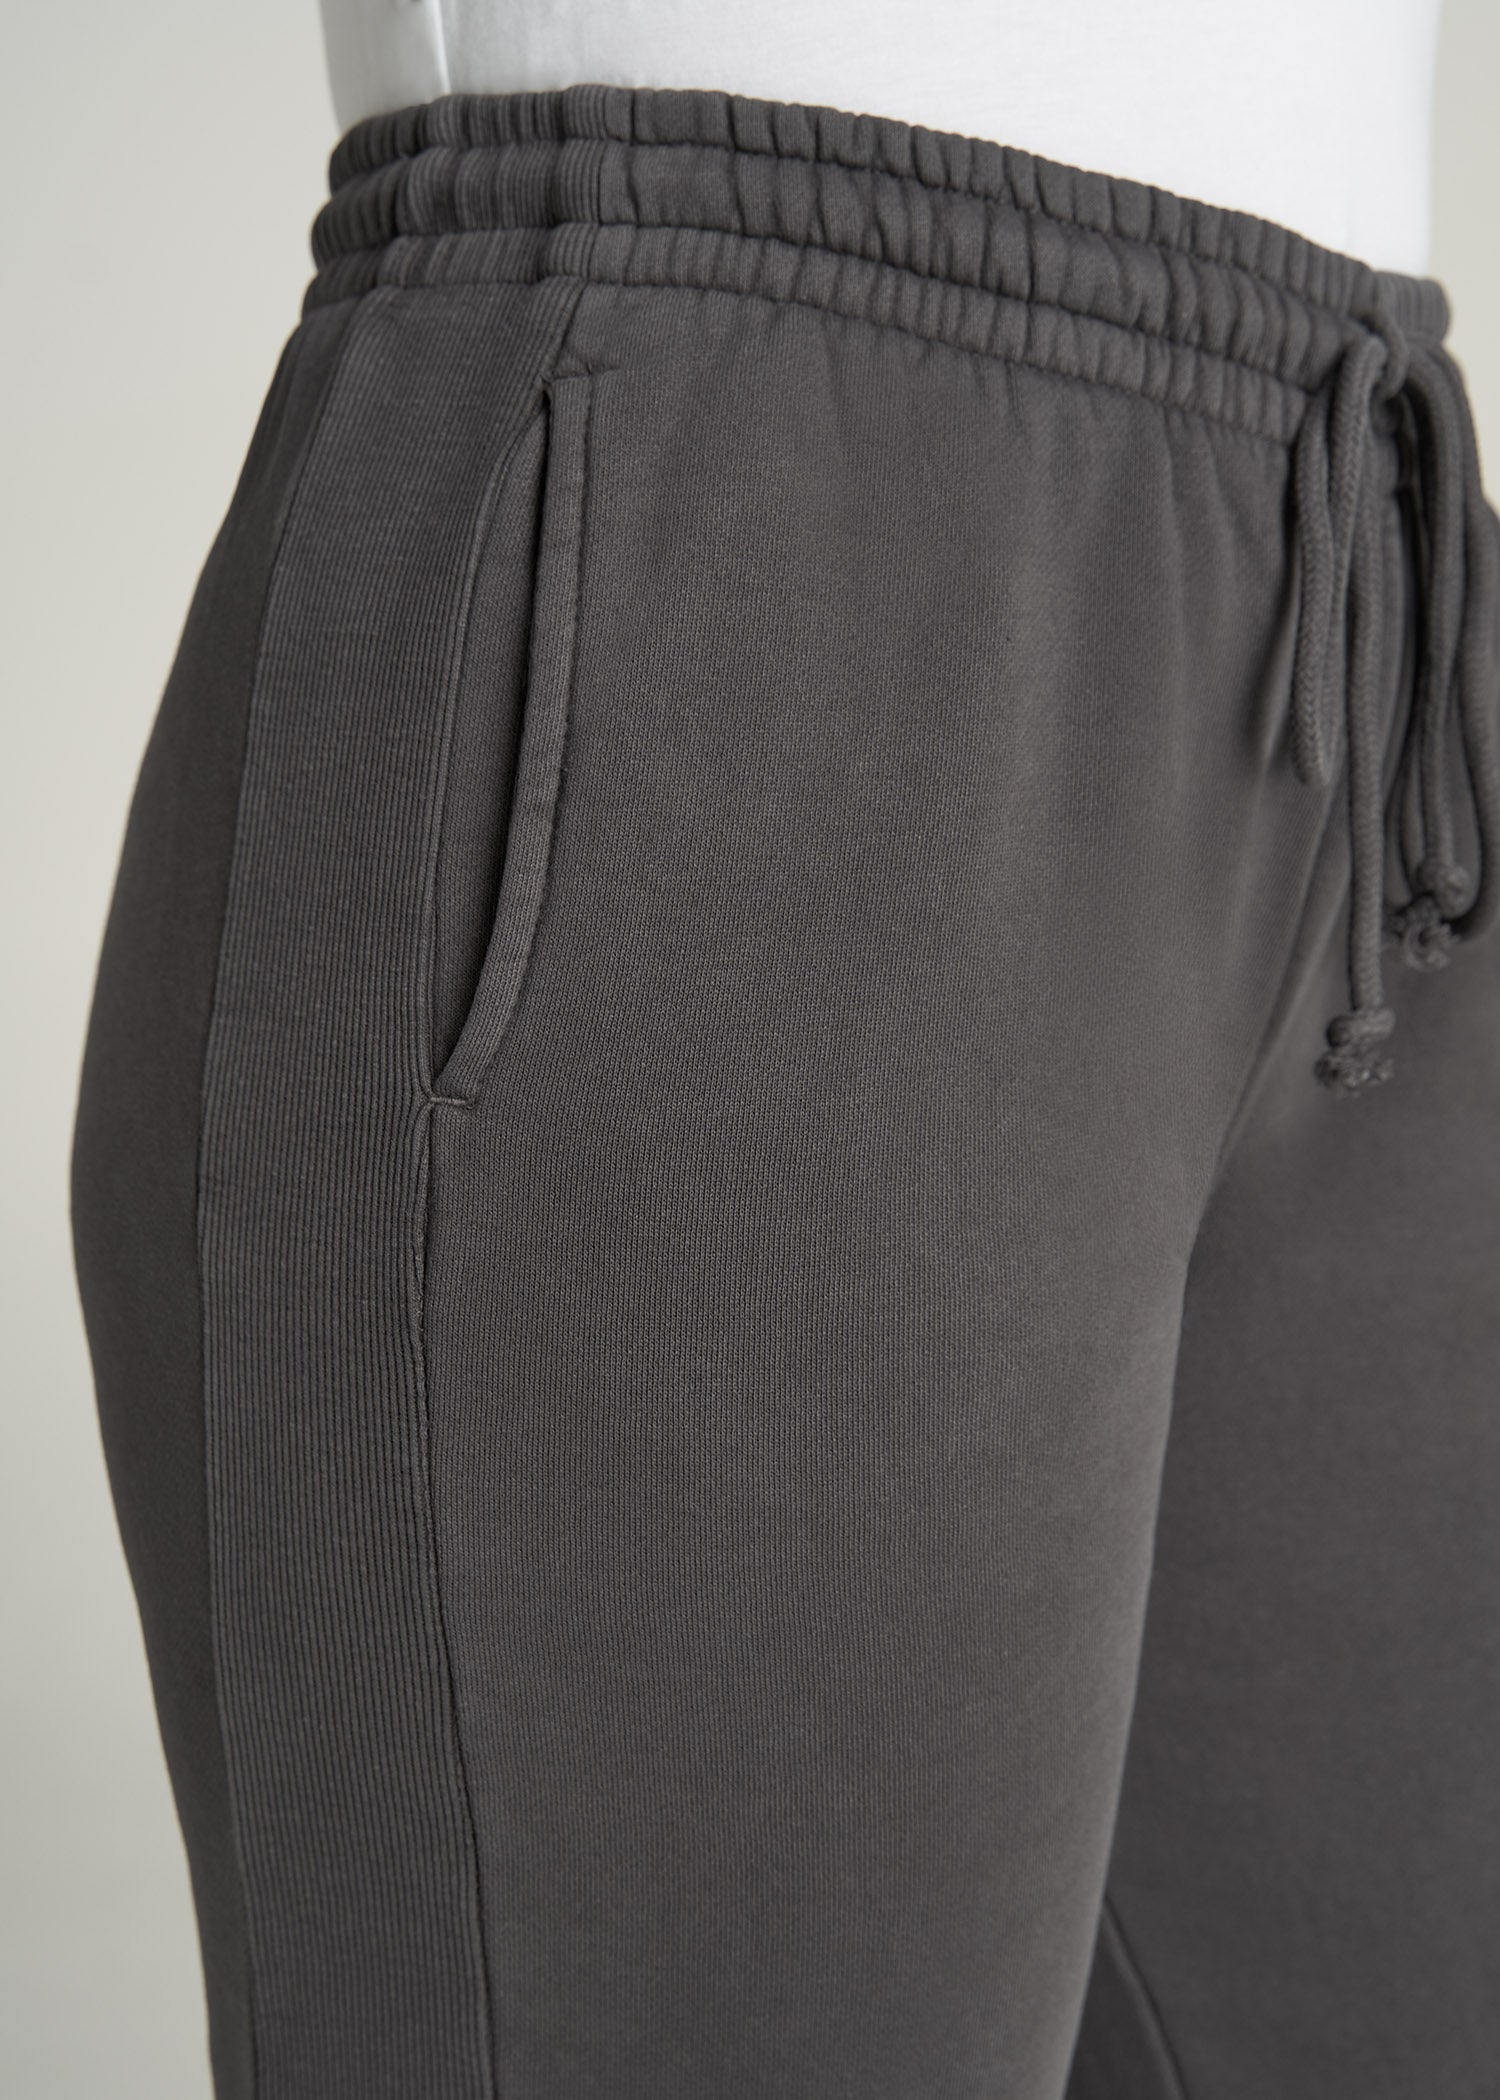 Slim Sweatpants Women's: High-Waisted Tall Women Black Sweatpants –  American Tall